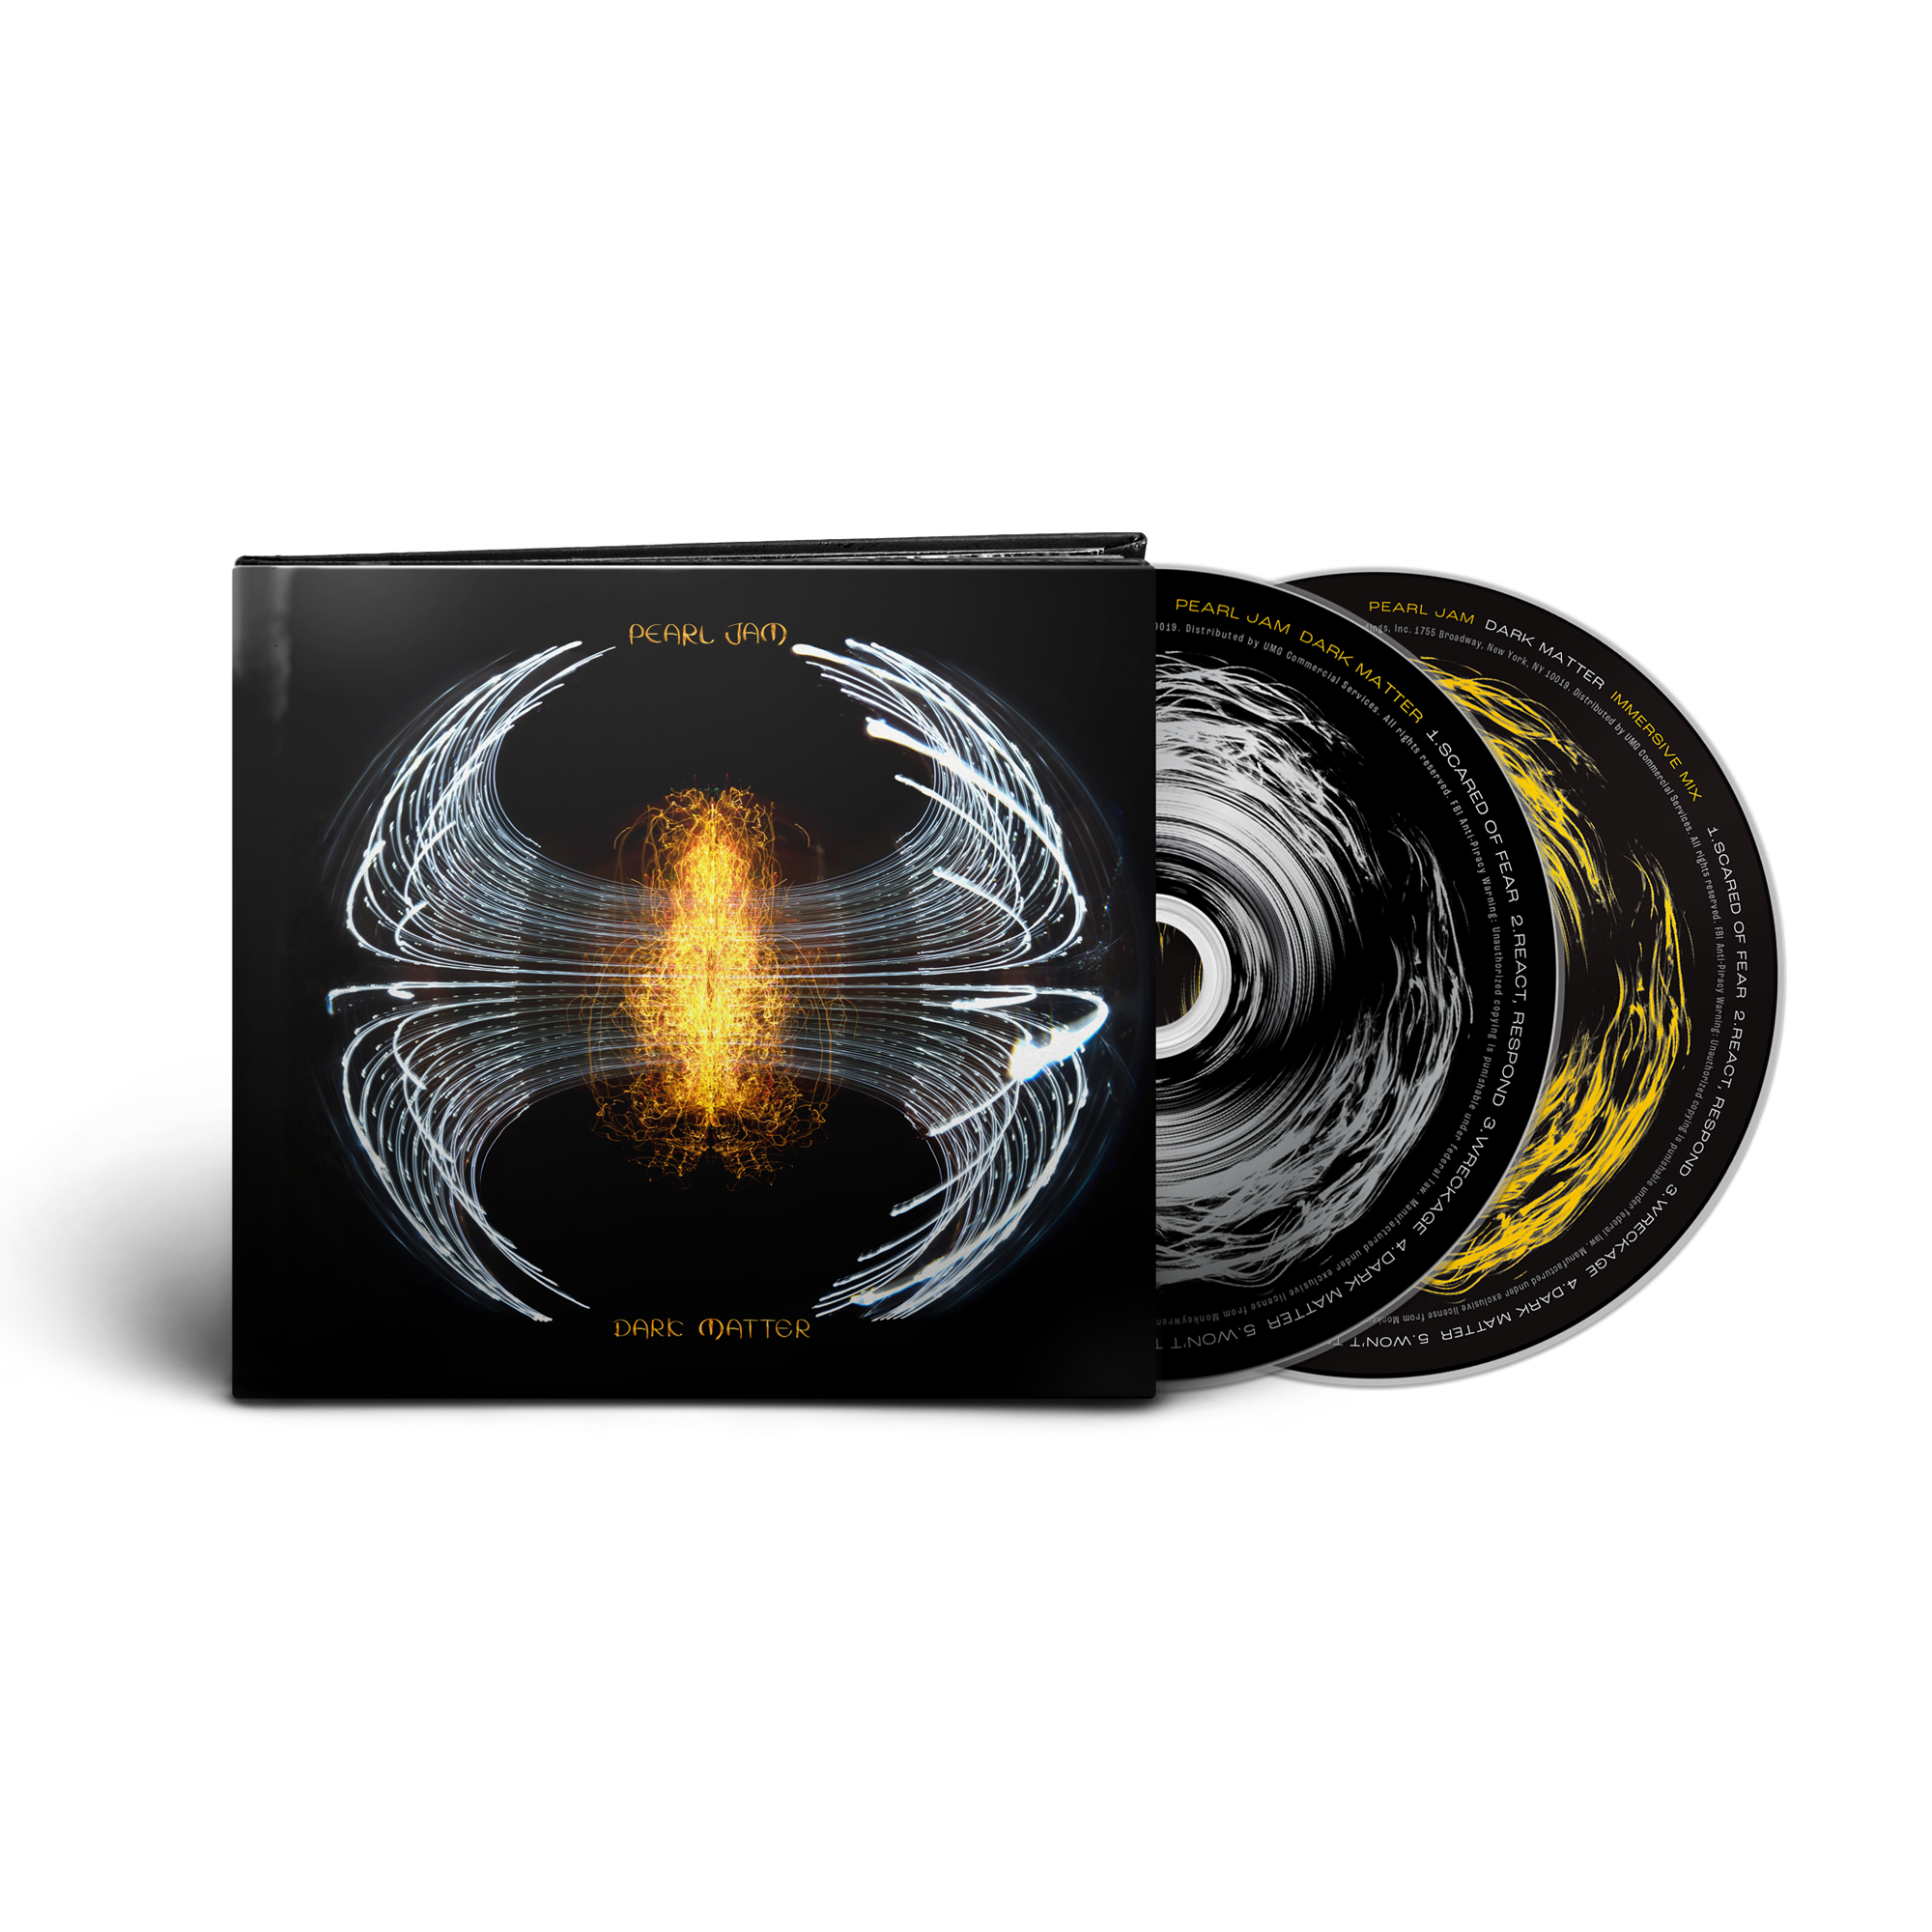 Pearl Jam  - Dark Matter Deluxe CD